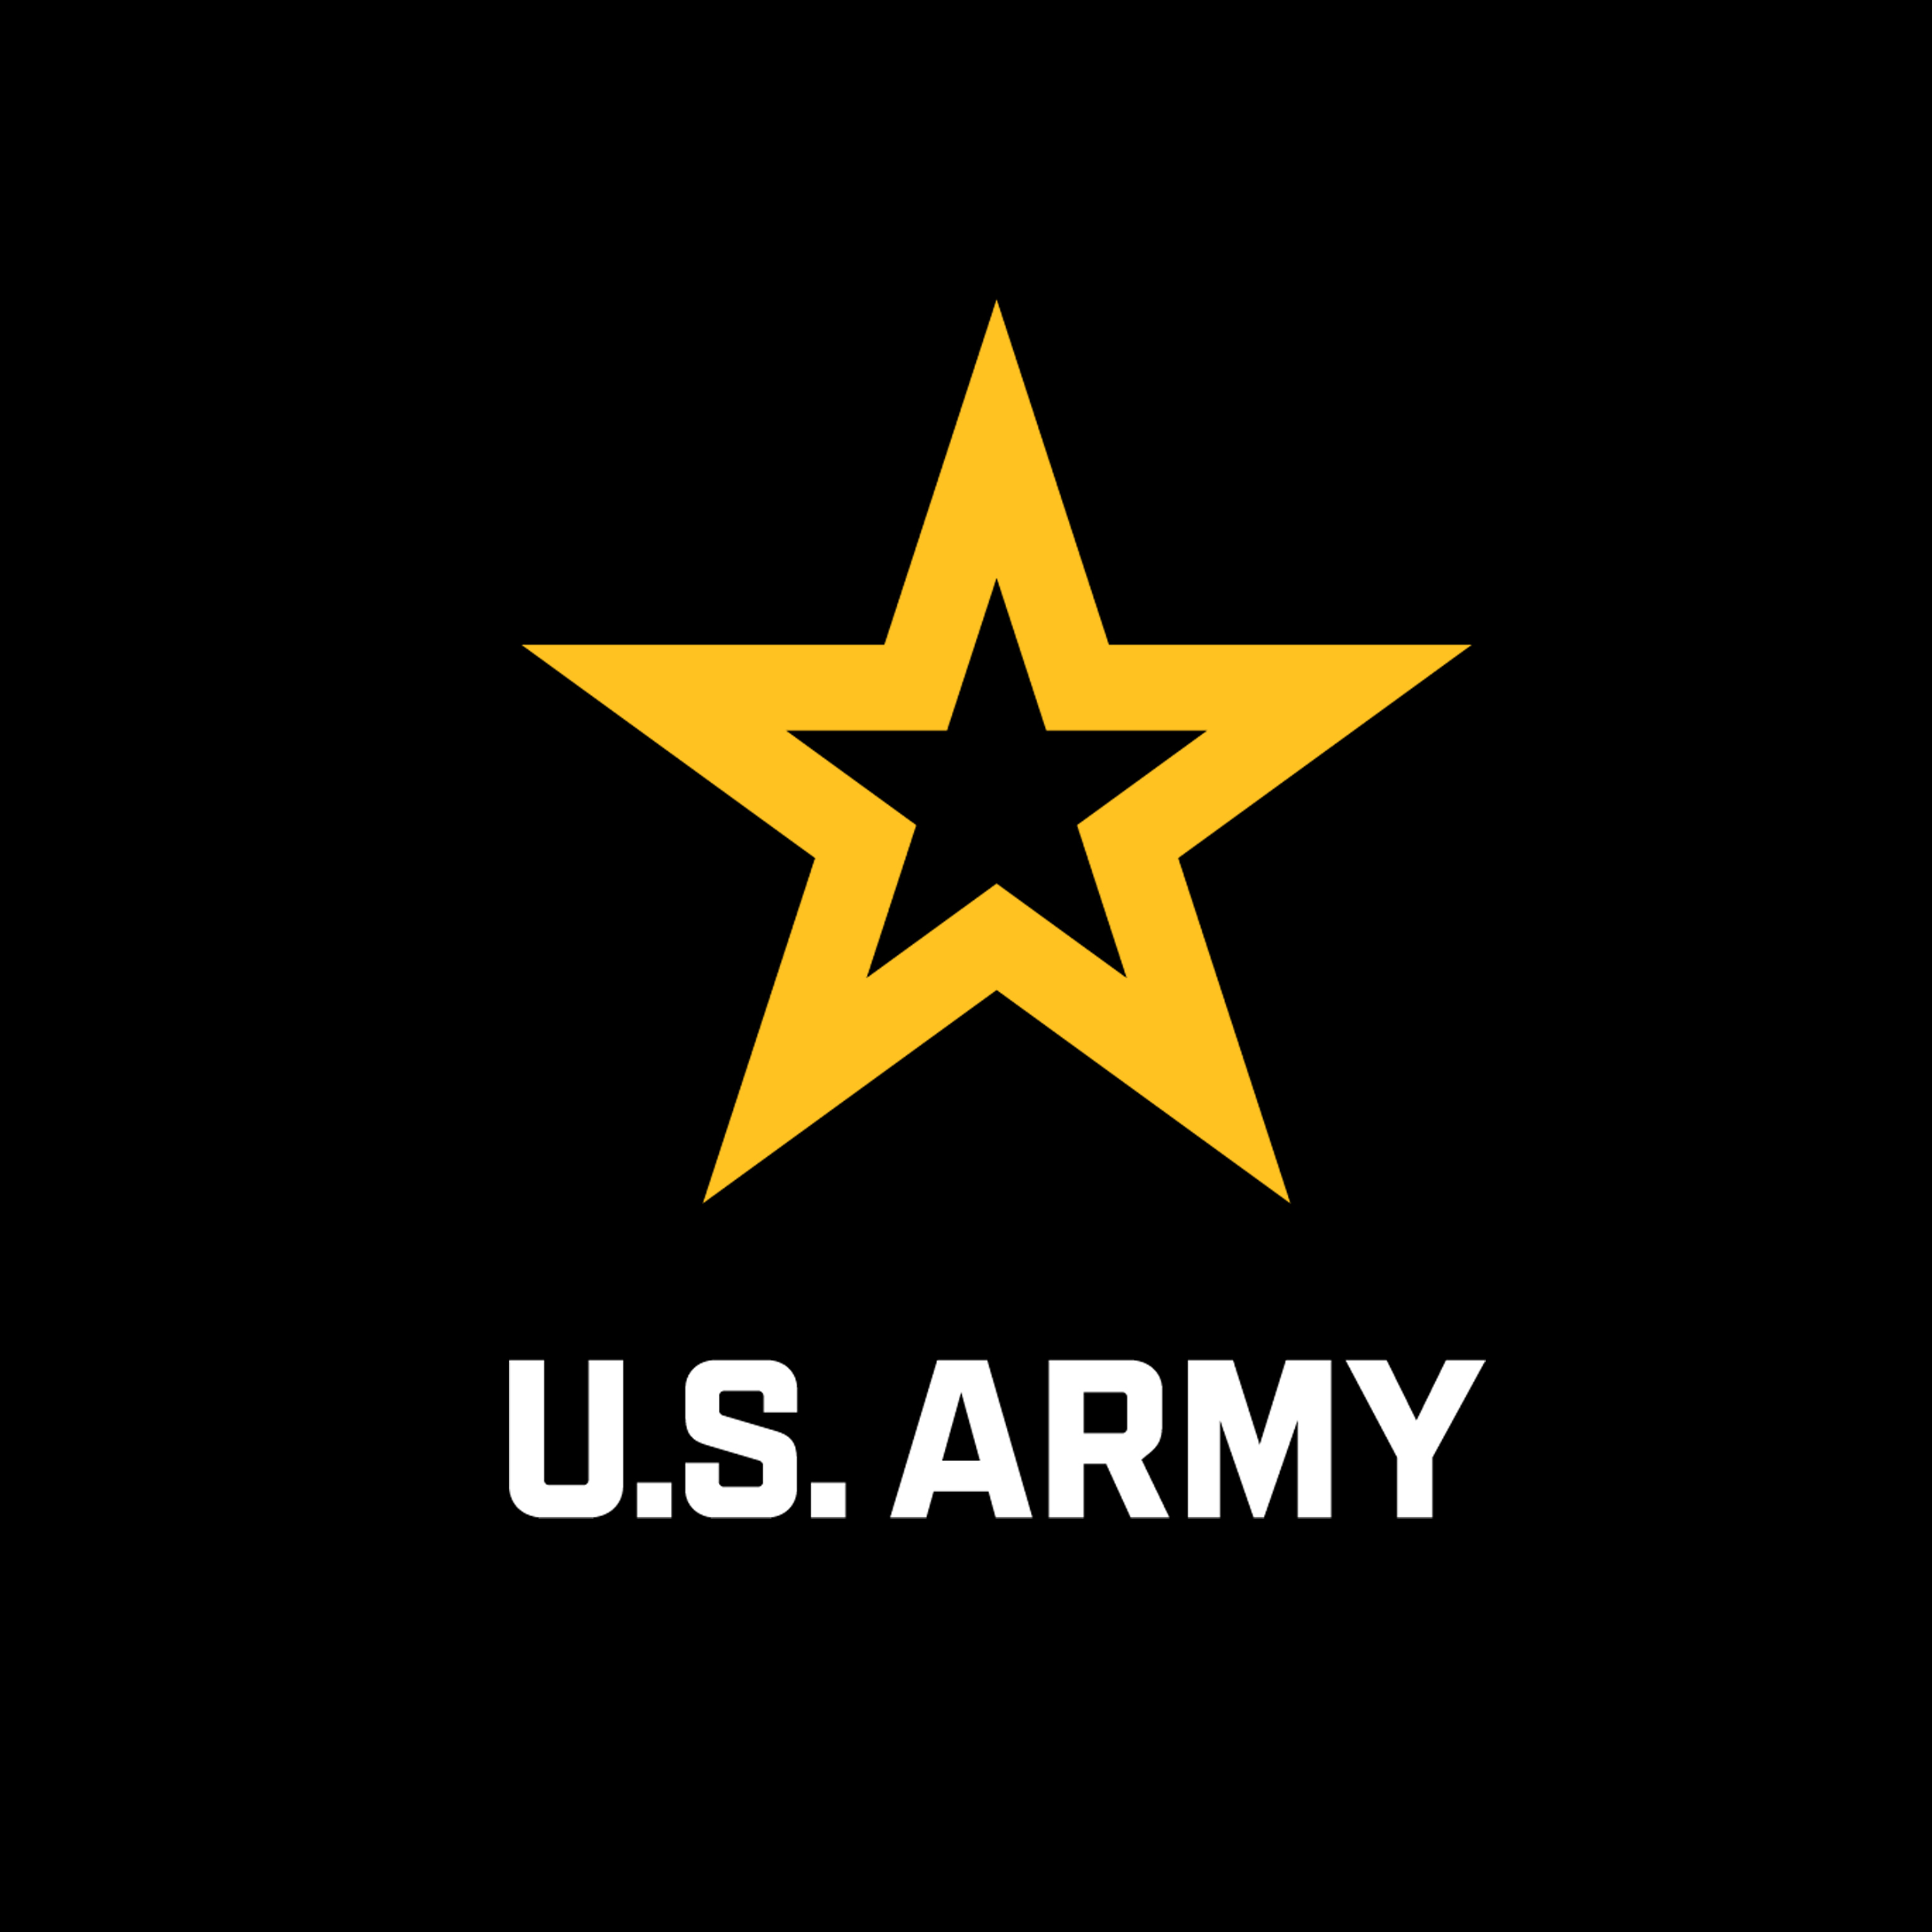 US Army Photo or Logo